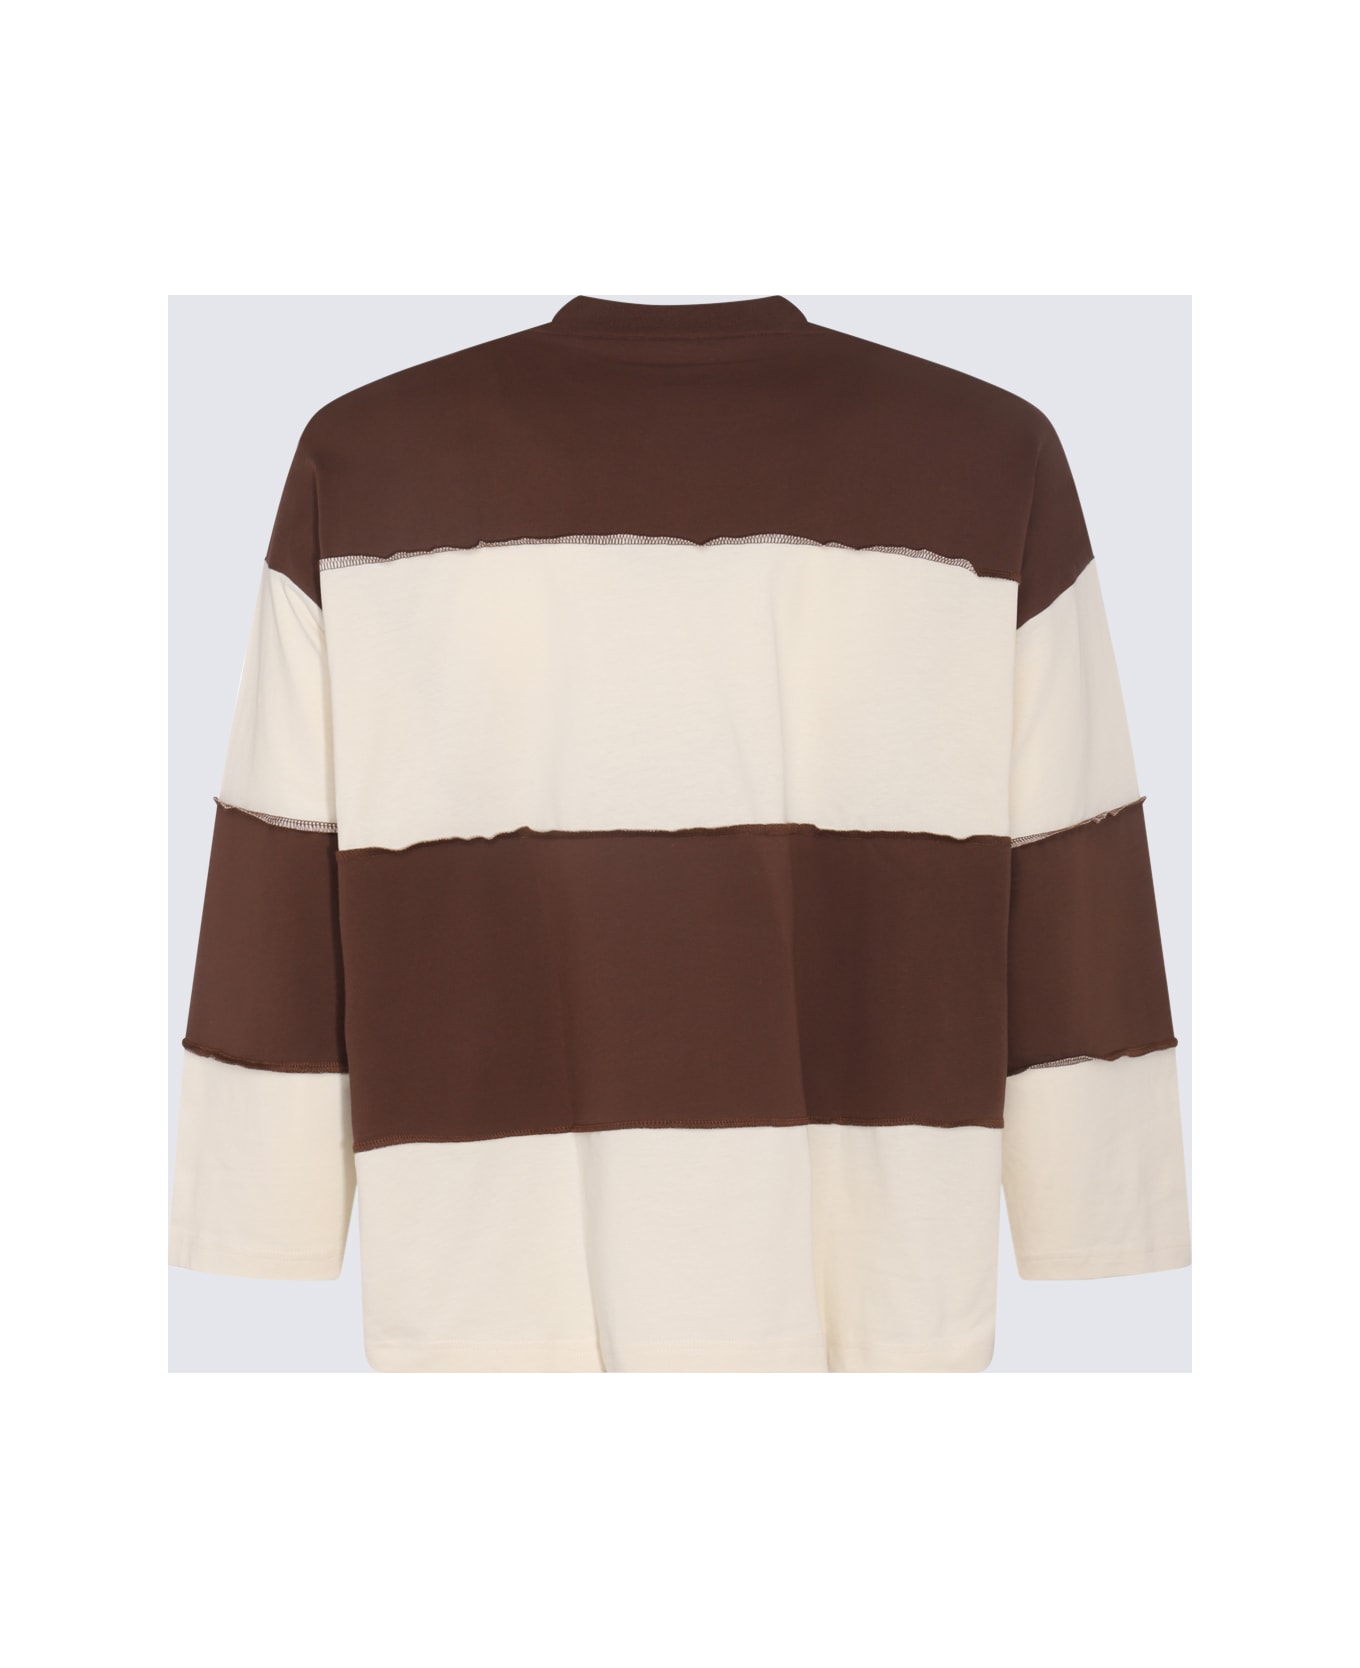 Sunnei Cream And Brown Cotton T-shirt - BROWN/LIGHT BEIGE シャツ